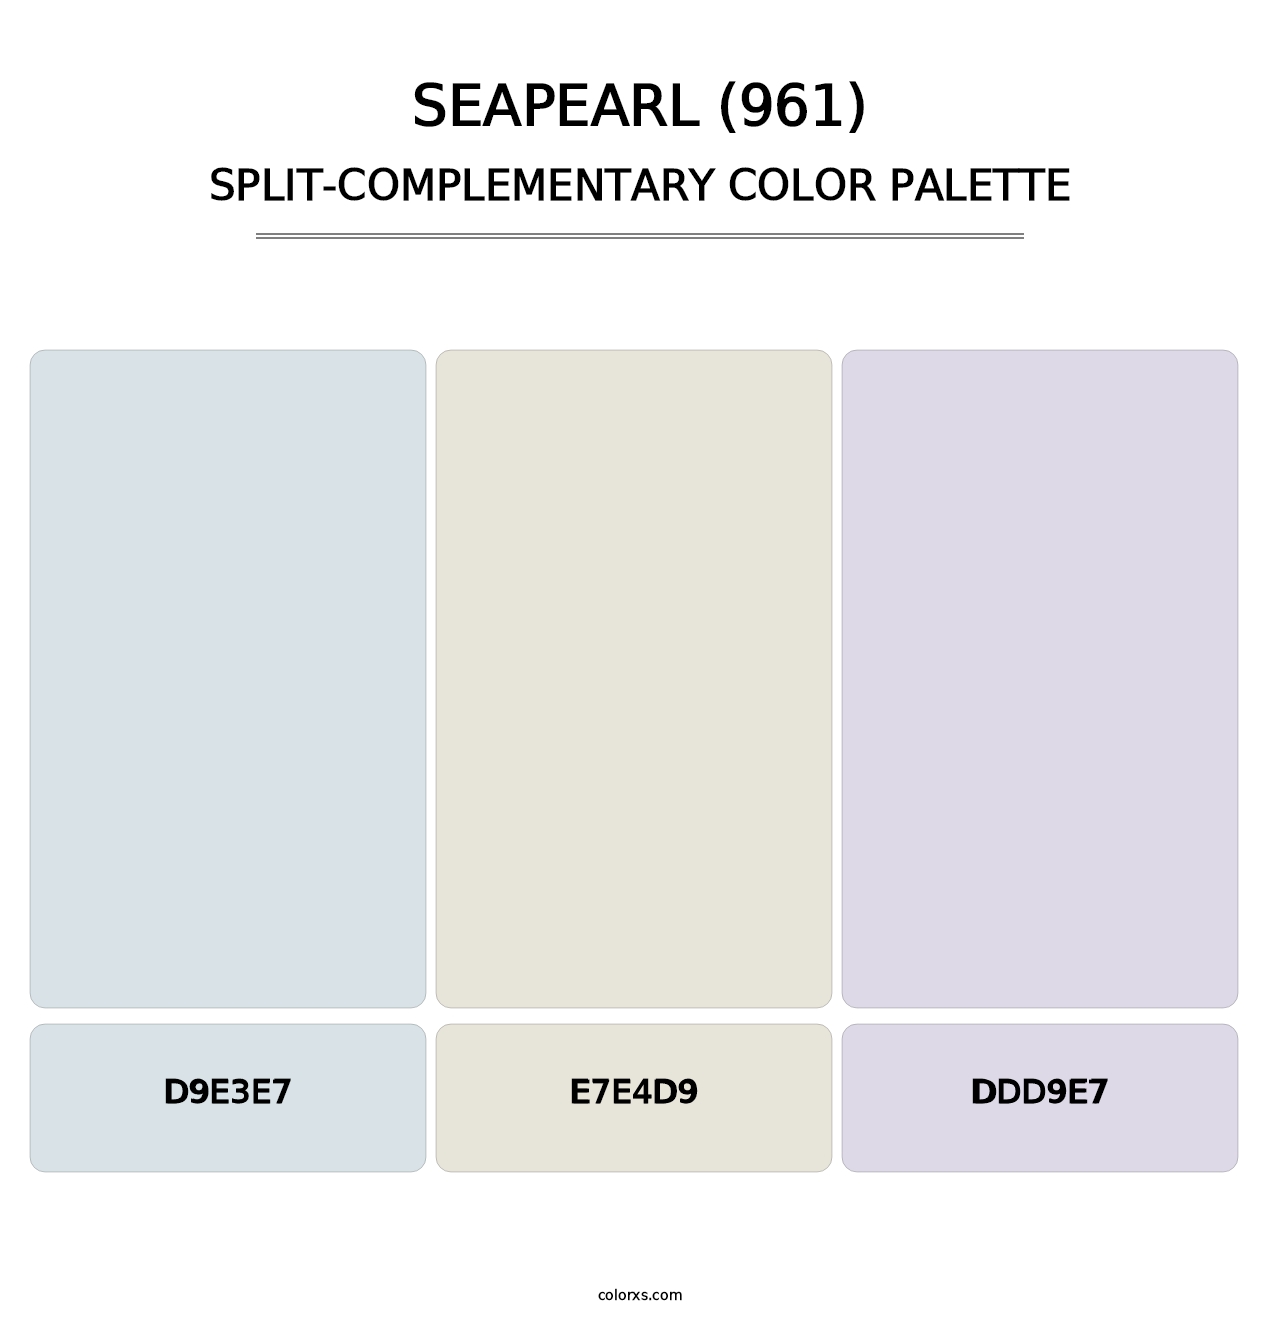 Seapearl (961) - Split-Complementary Color Palette